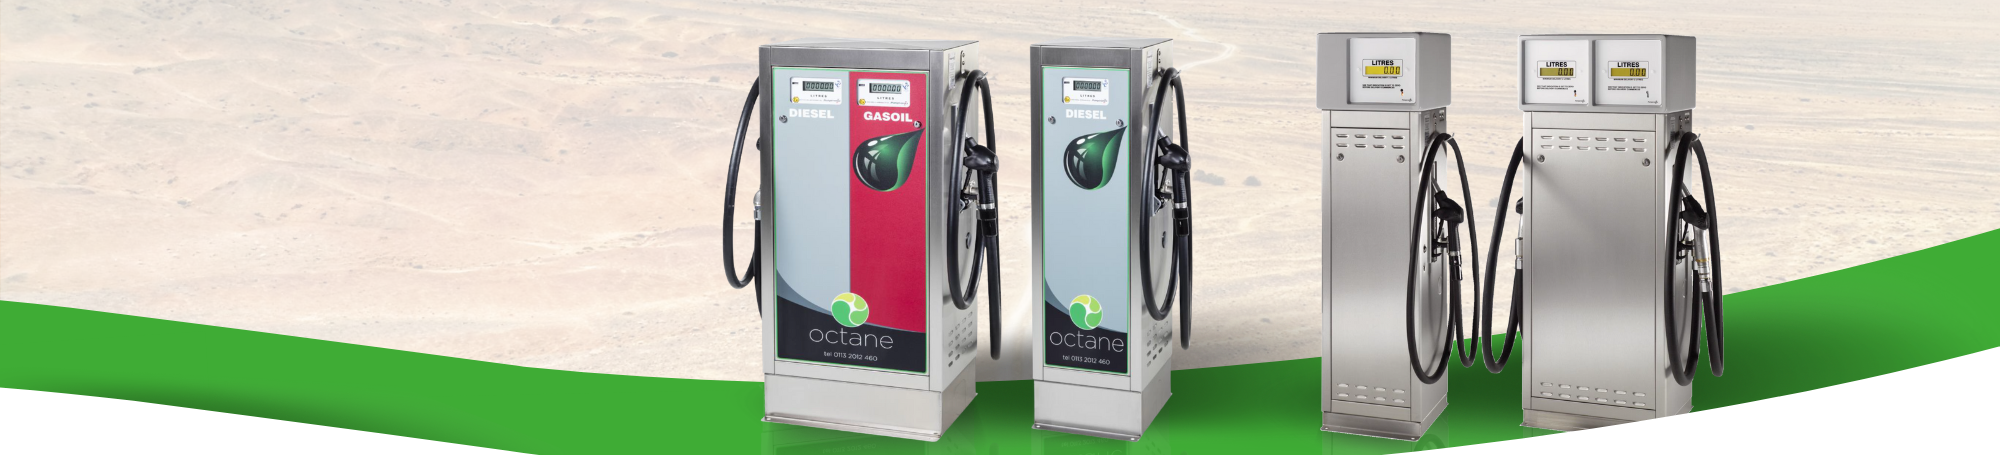 octane fuel dispensers